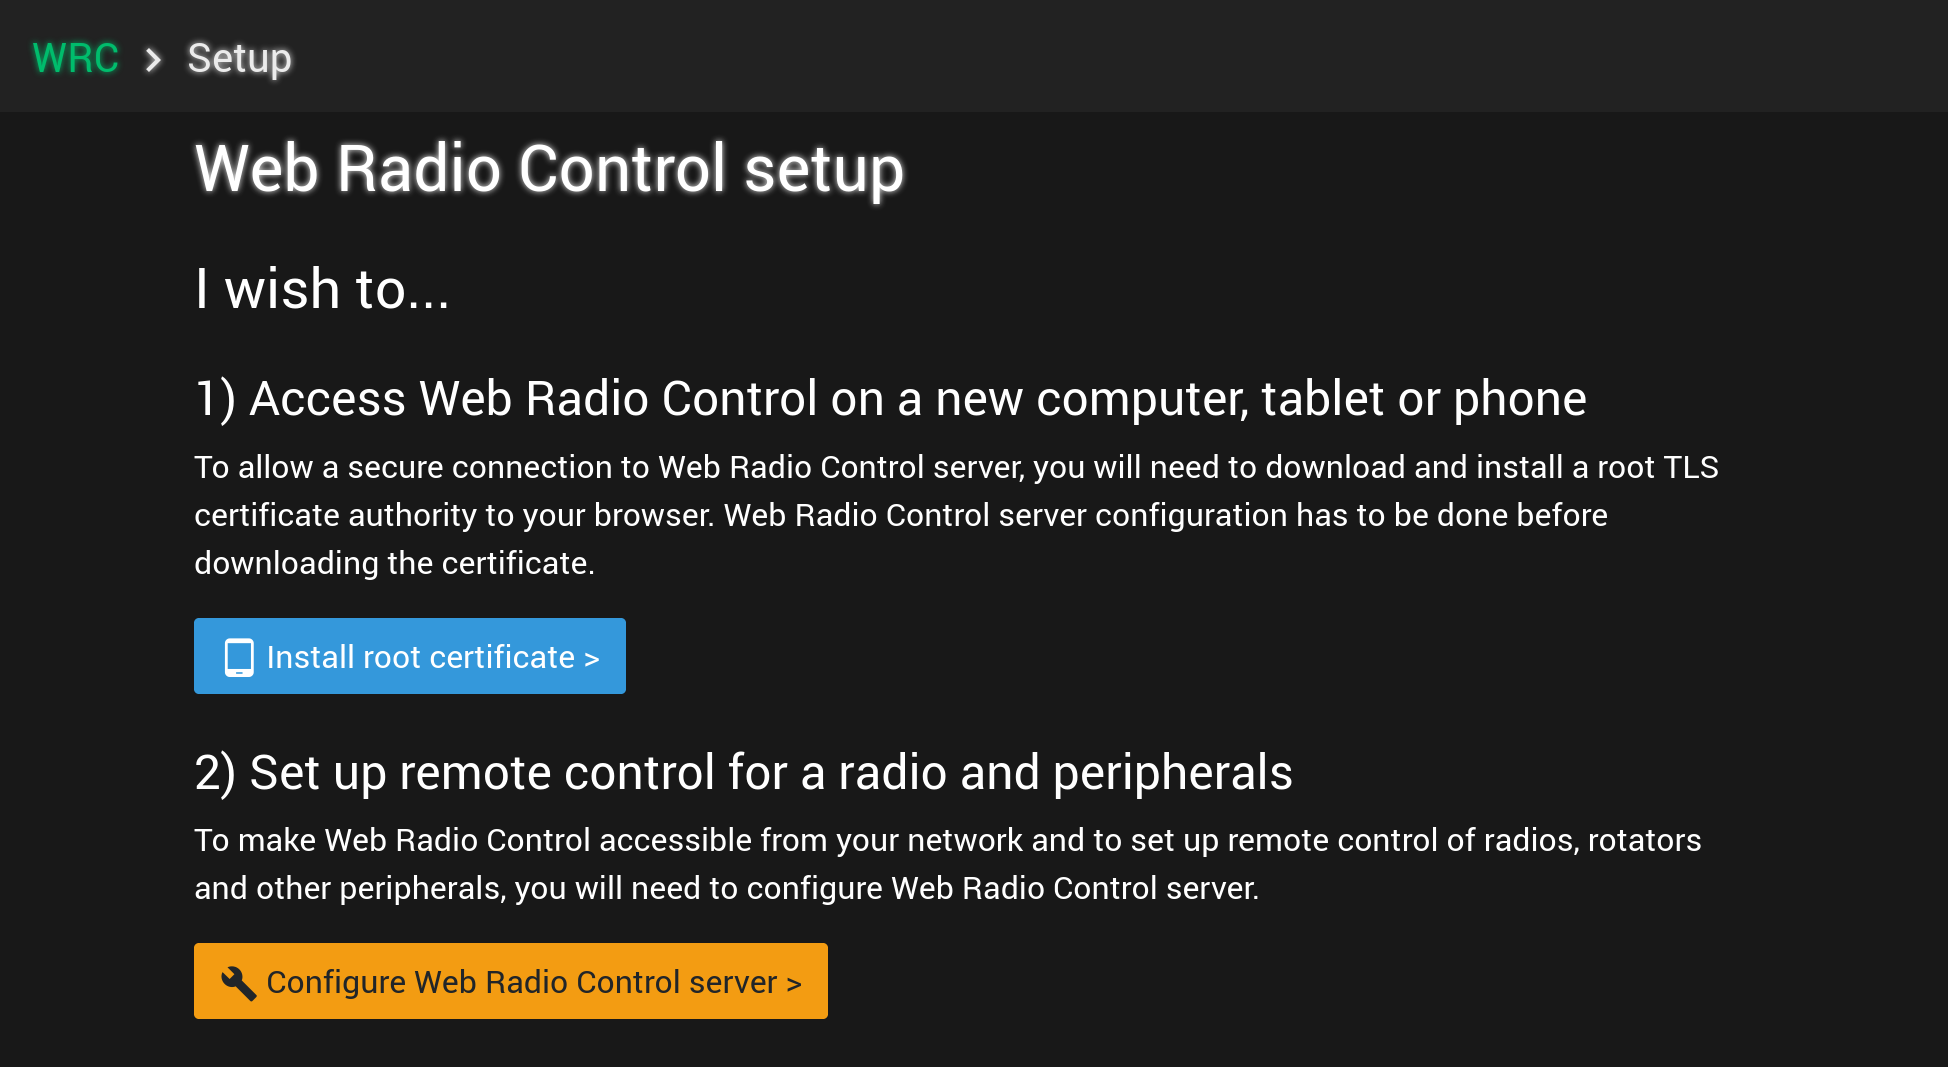 The main screen of Web Radio Control setup user interface